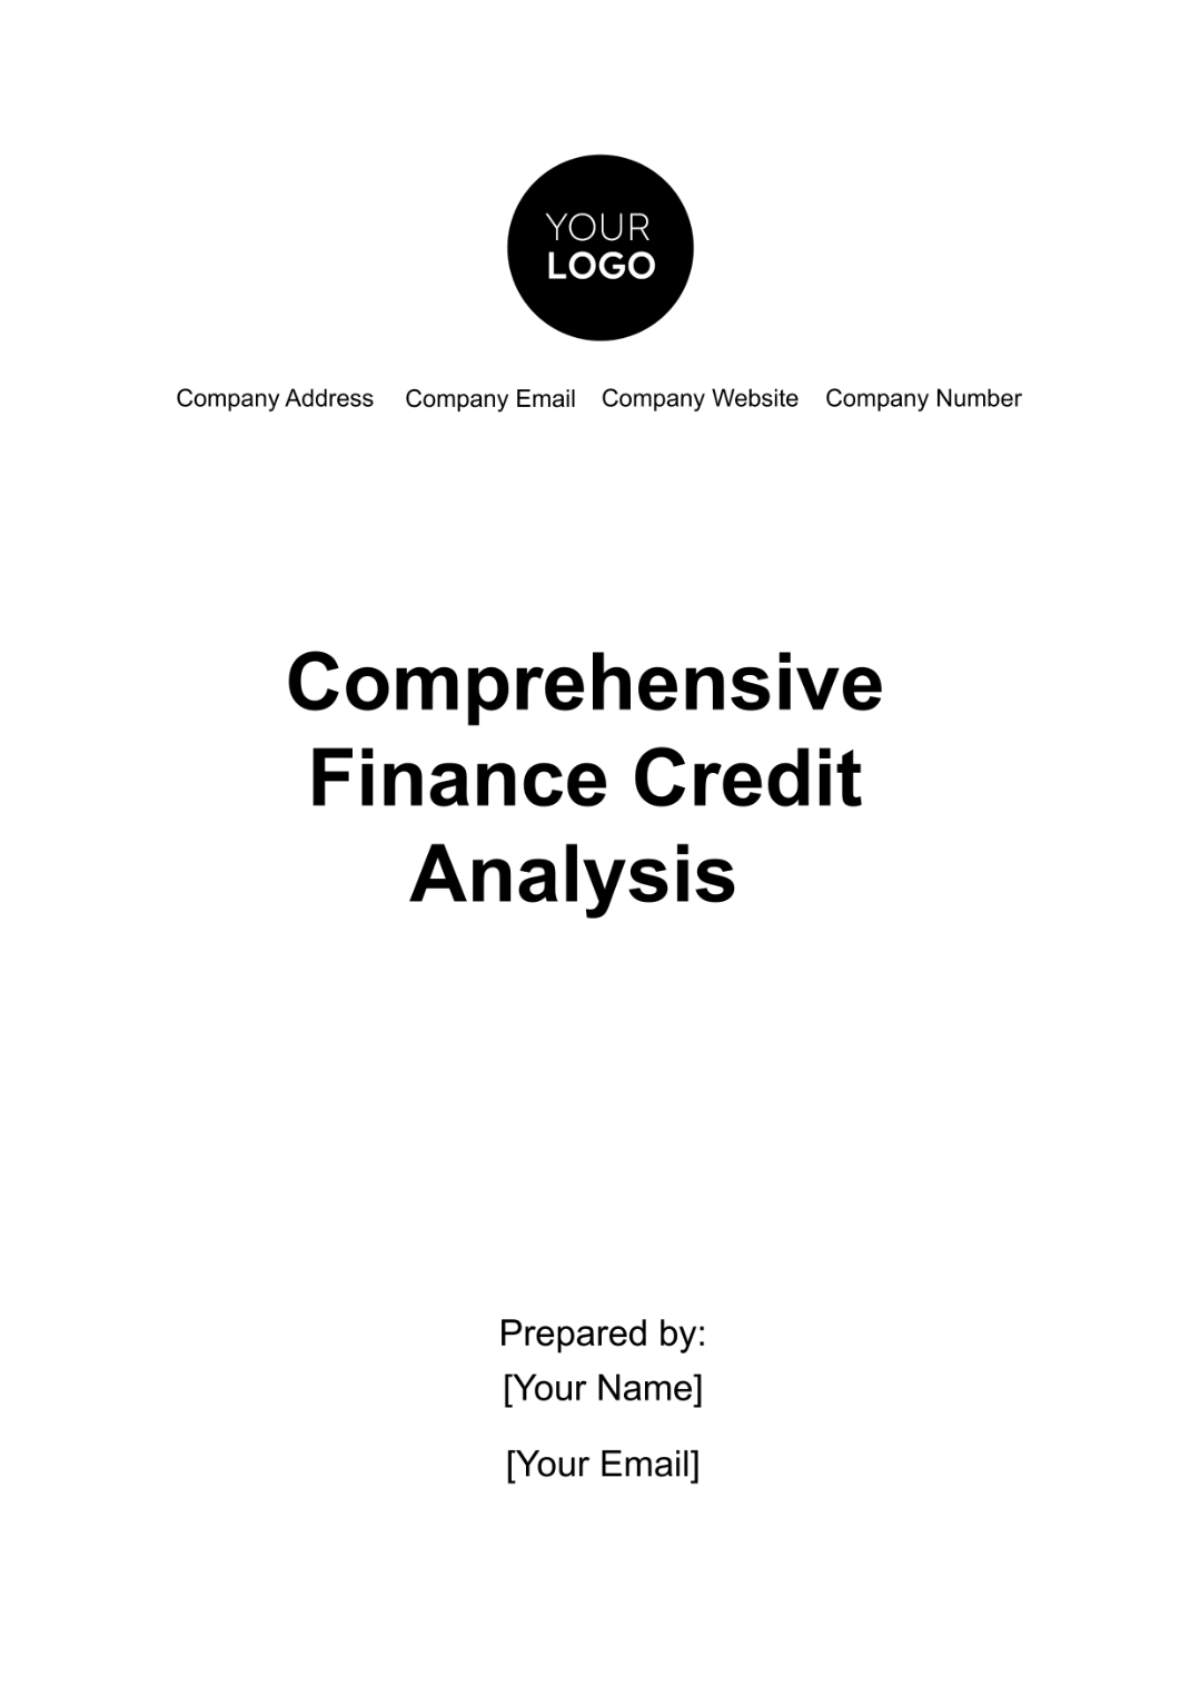 Comprehensive Finance Credit Analysis Template